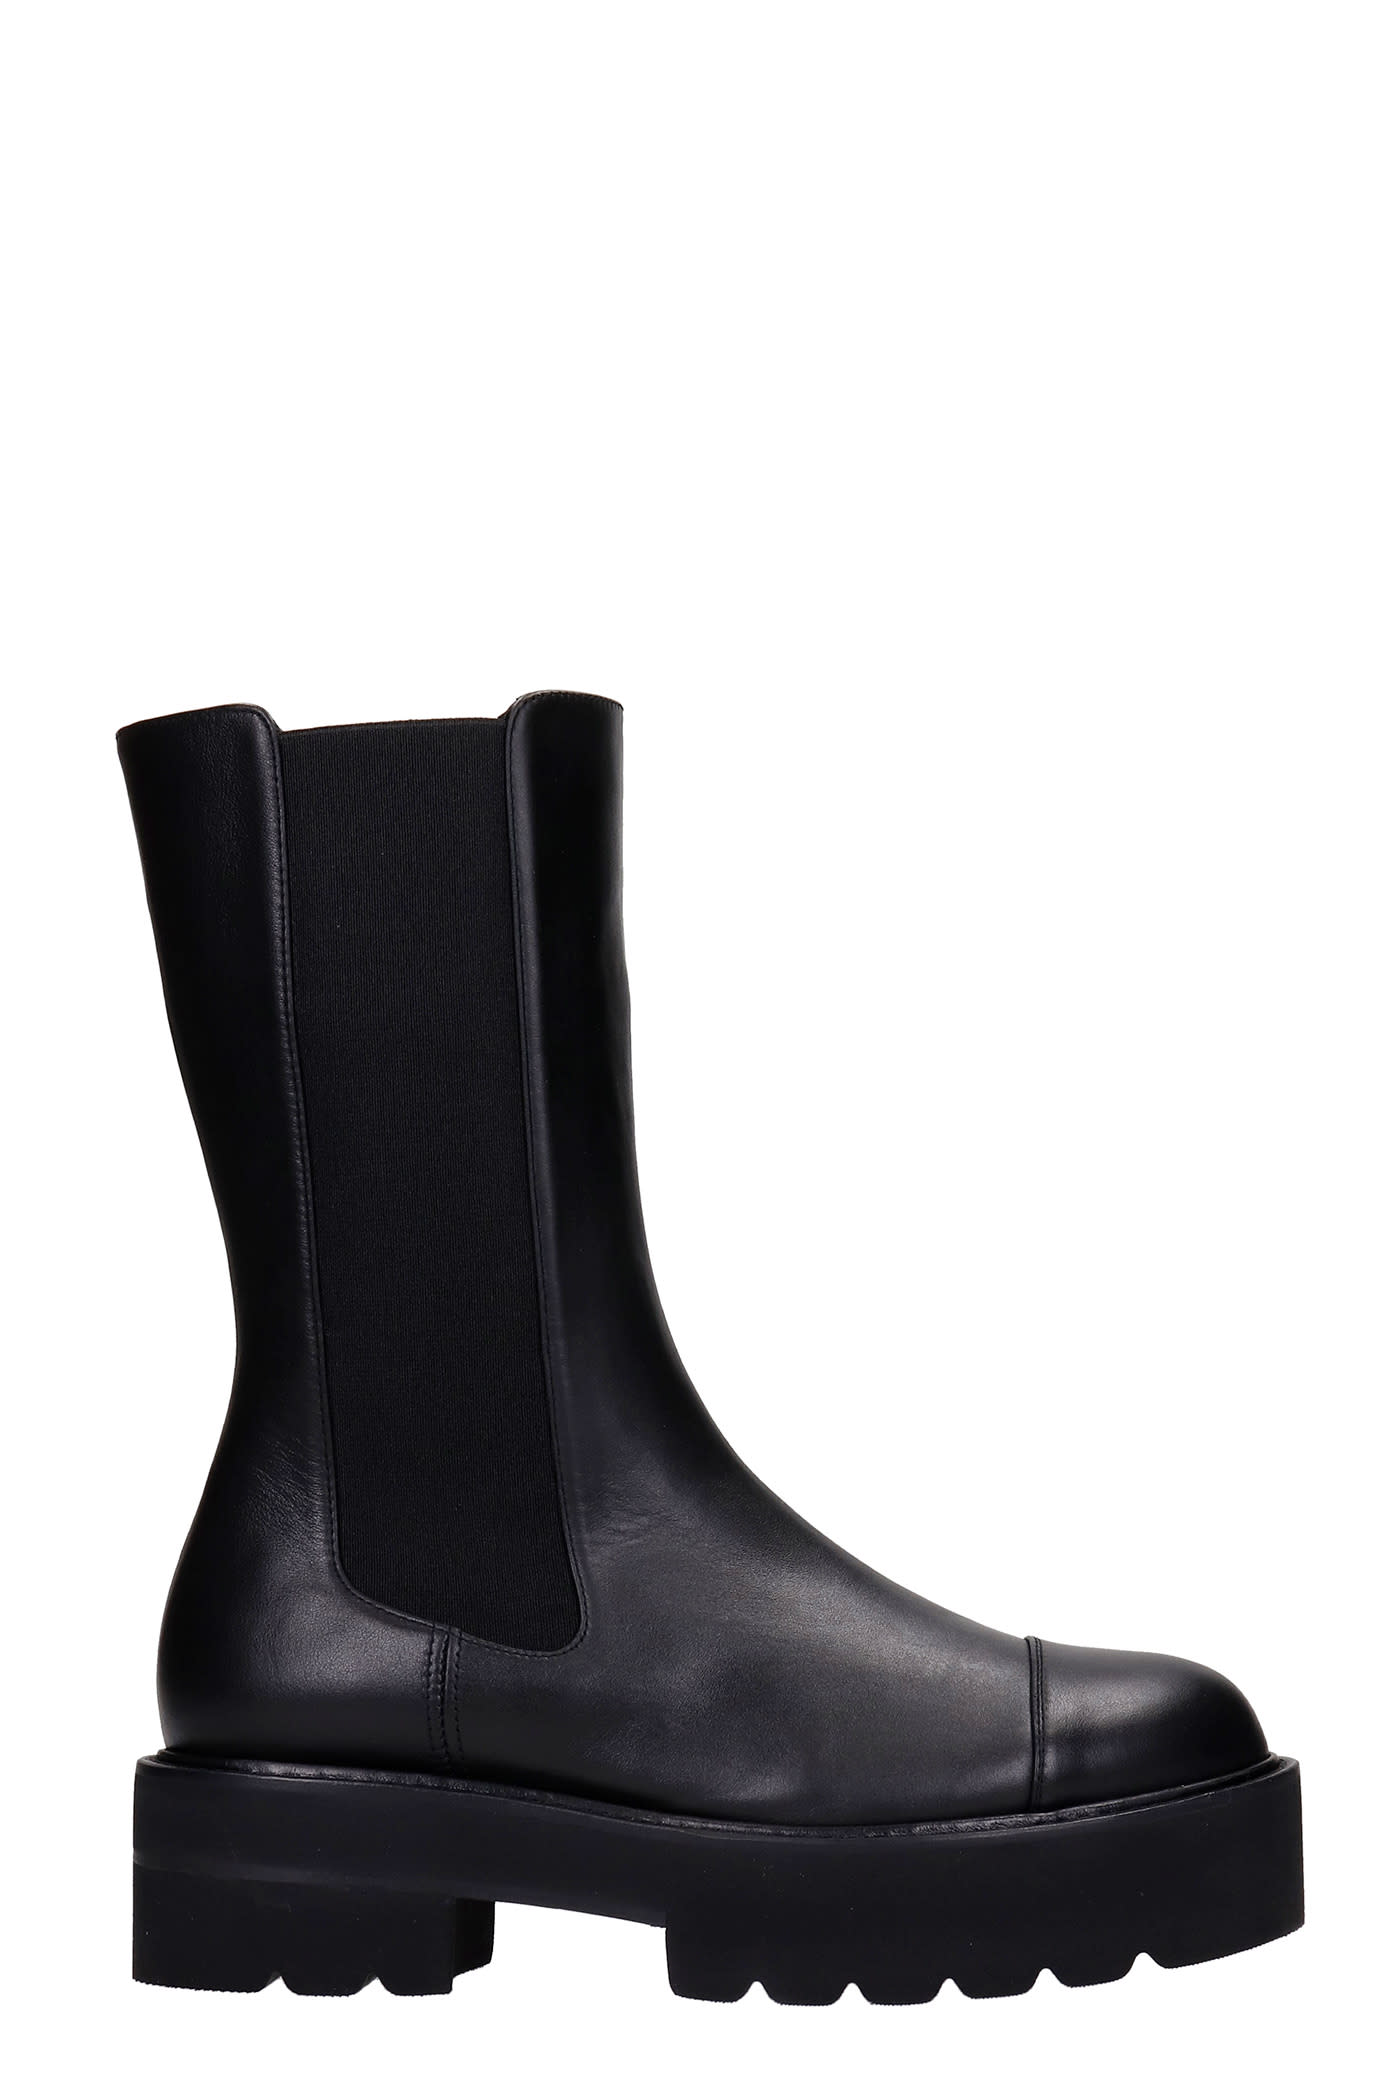 Stuart Weitzman Presley Ultfl Combat Boots In Black Leather